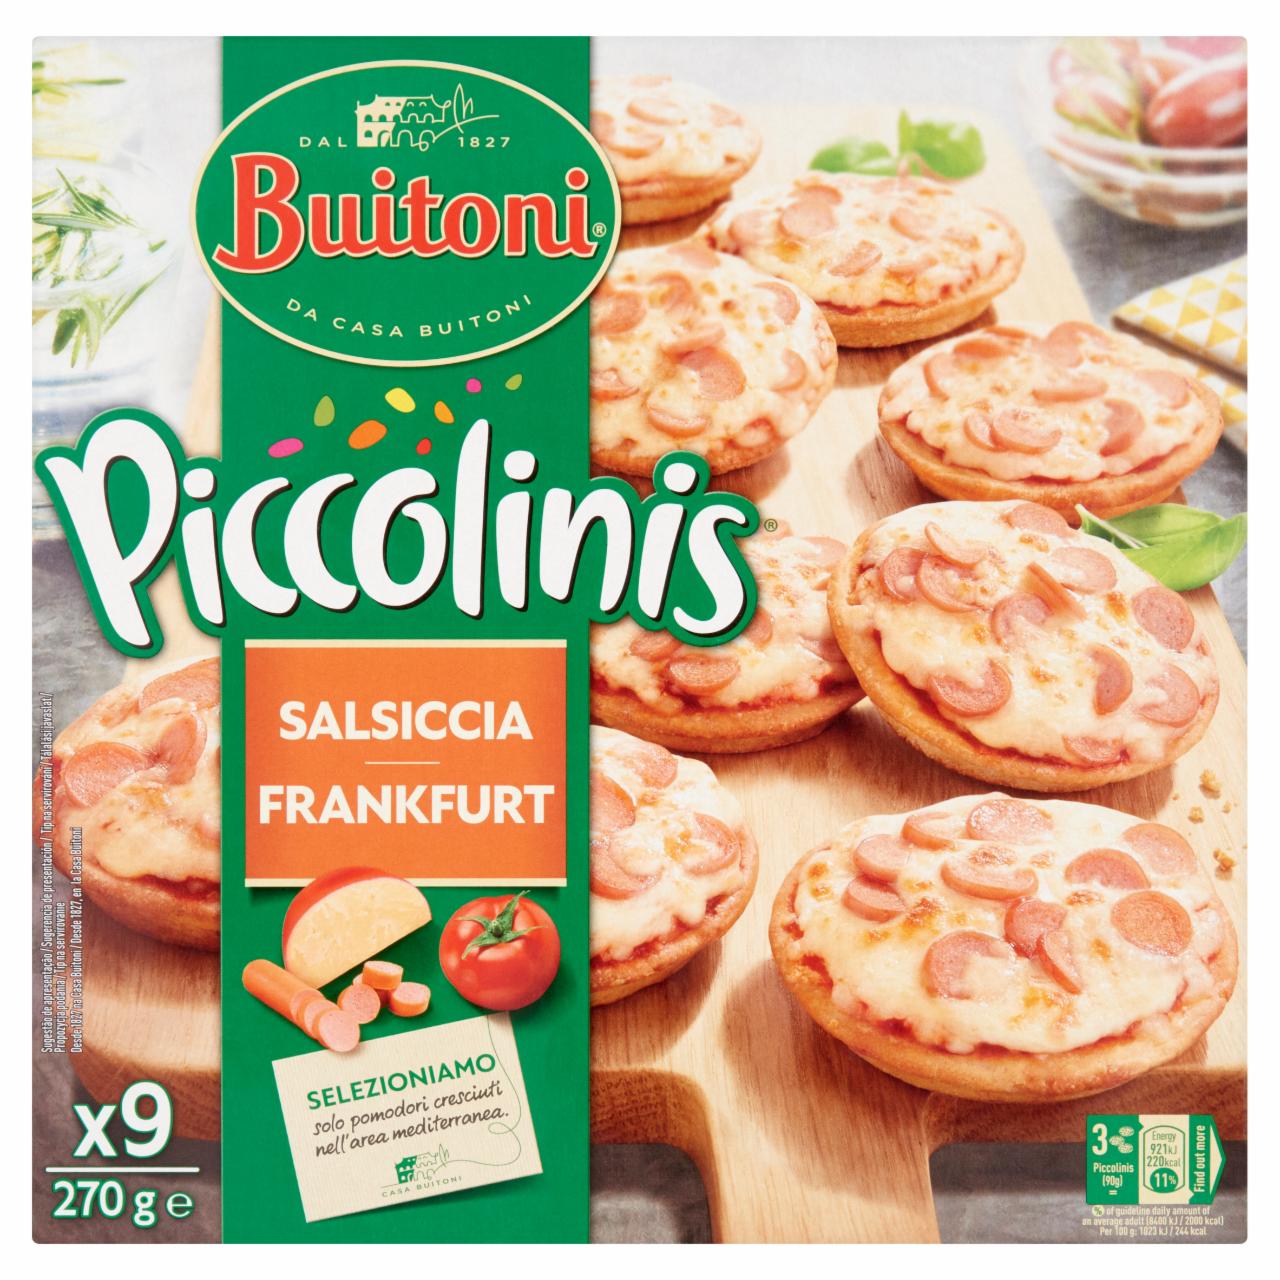 Képek - Buitoni Piccolinis Salsiccia gyorsfagyasztott mini pizza 9 db 270 g